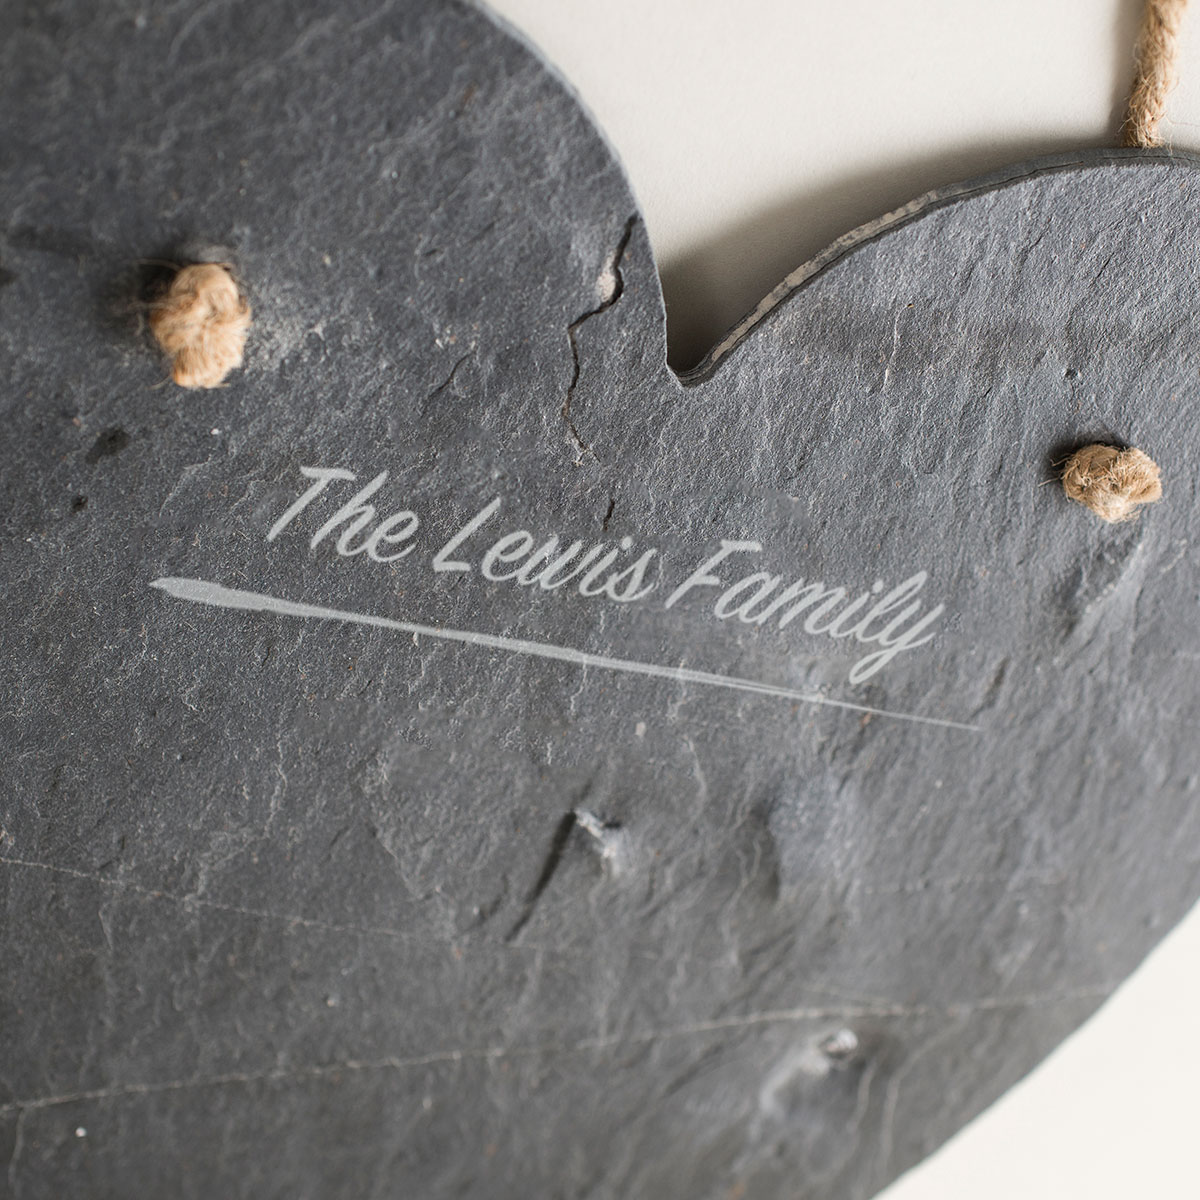 Personalised Heart-Shaped Slate Chalkboard - Family Name